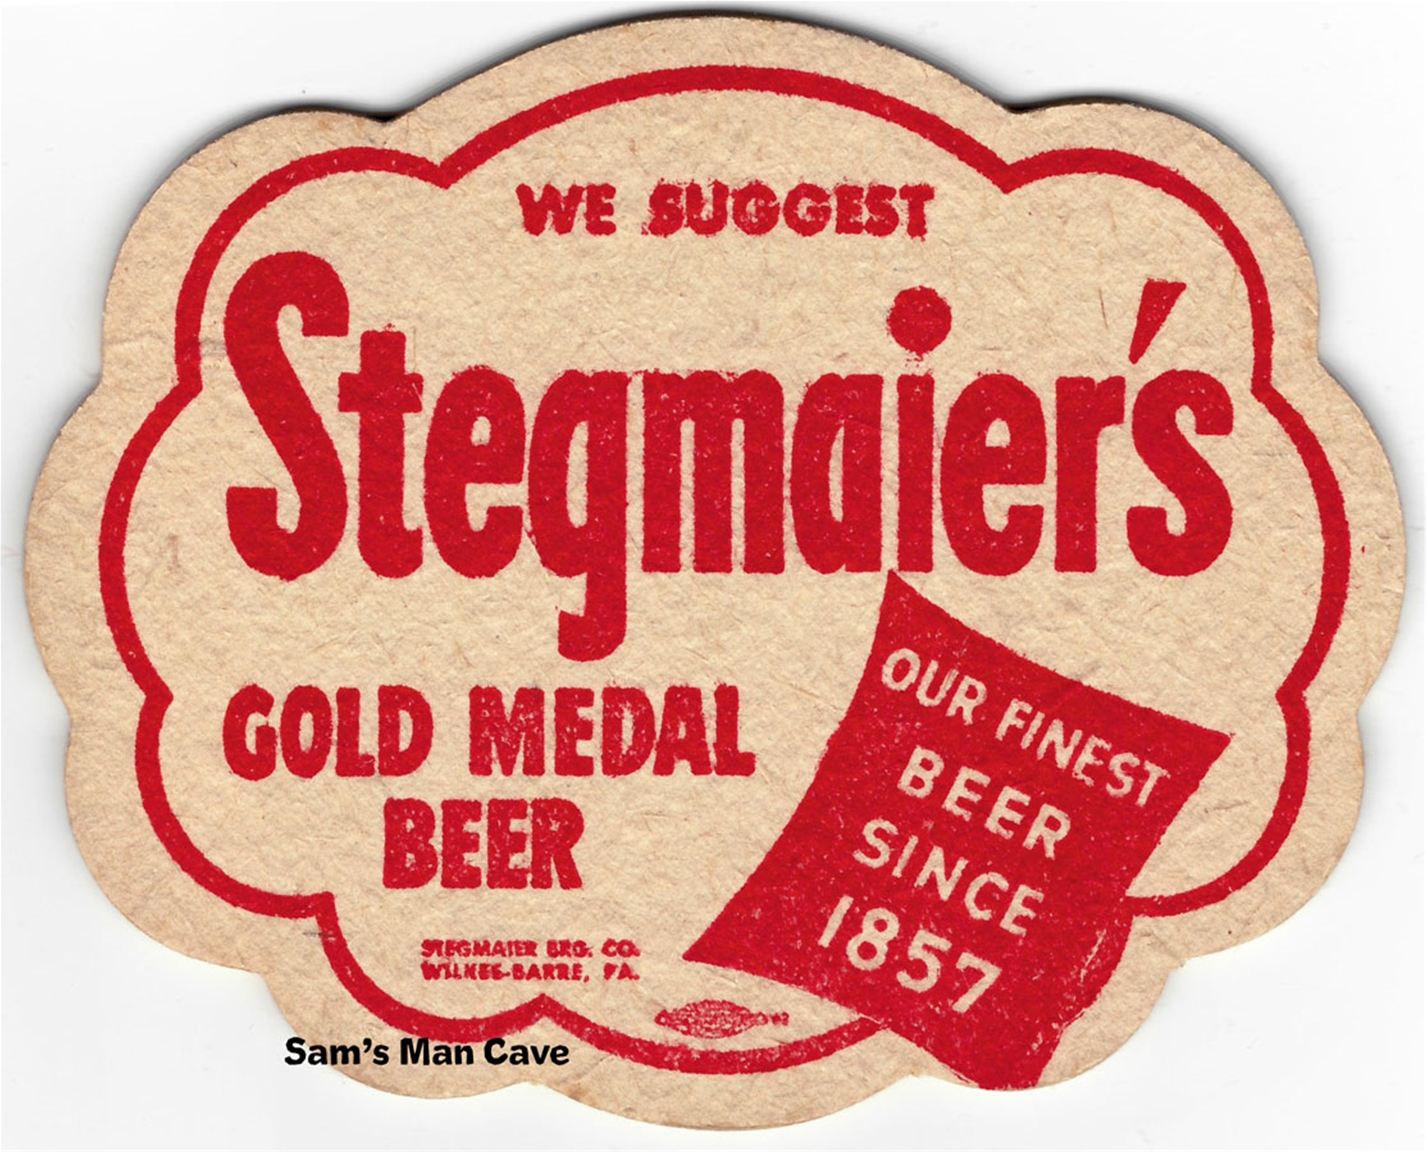 Stegmaier's We Suggest Beer Coaster